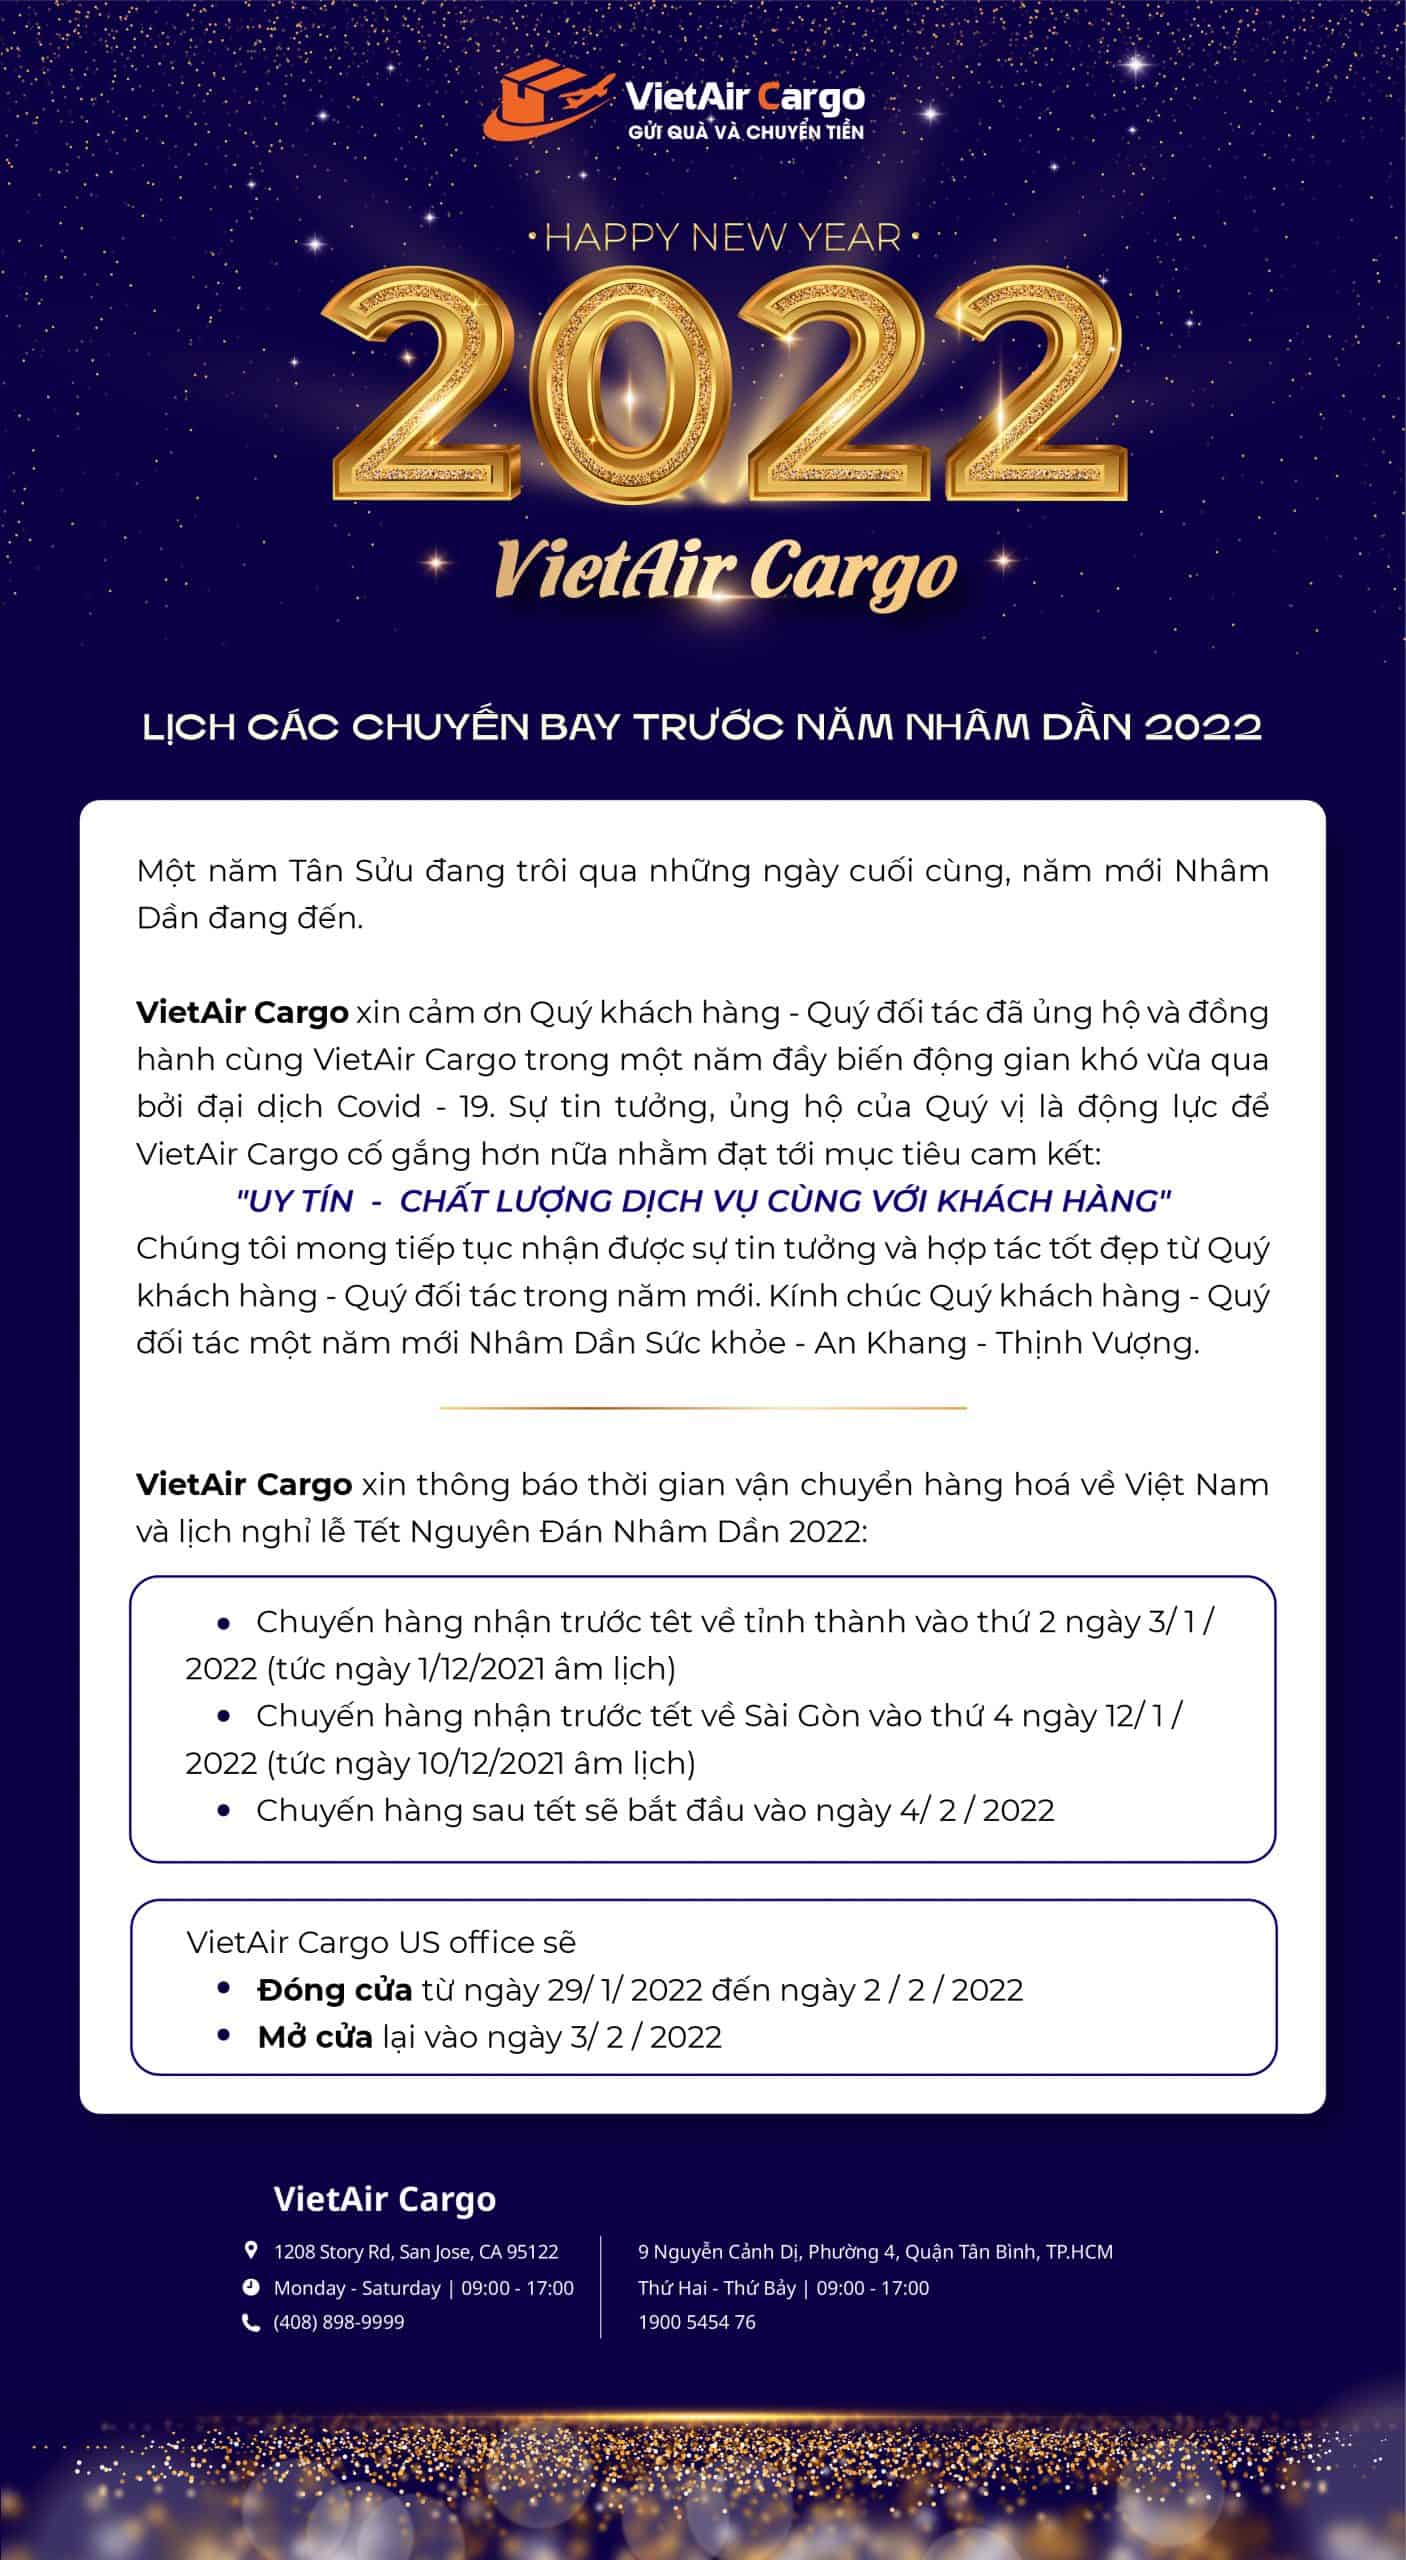 Vietaircargo-2022-01-VN-v1-1-scaled VietAir Cargo Mừng Xuân Nhâm Dần 2022